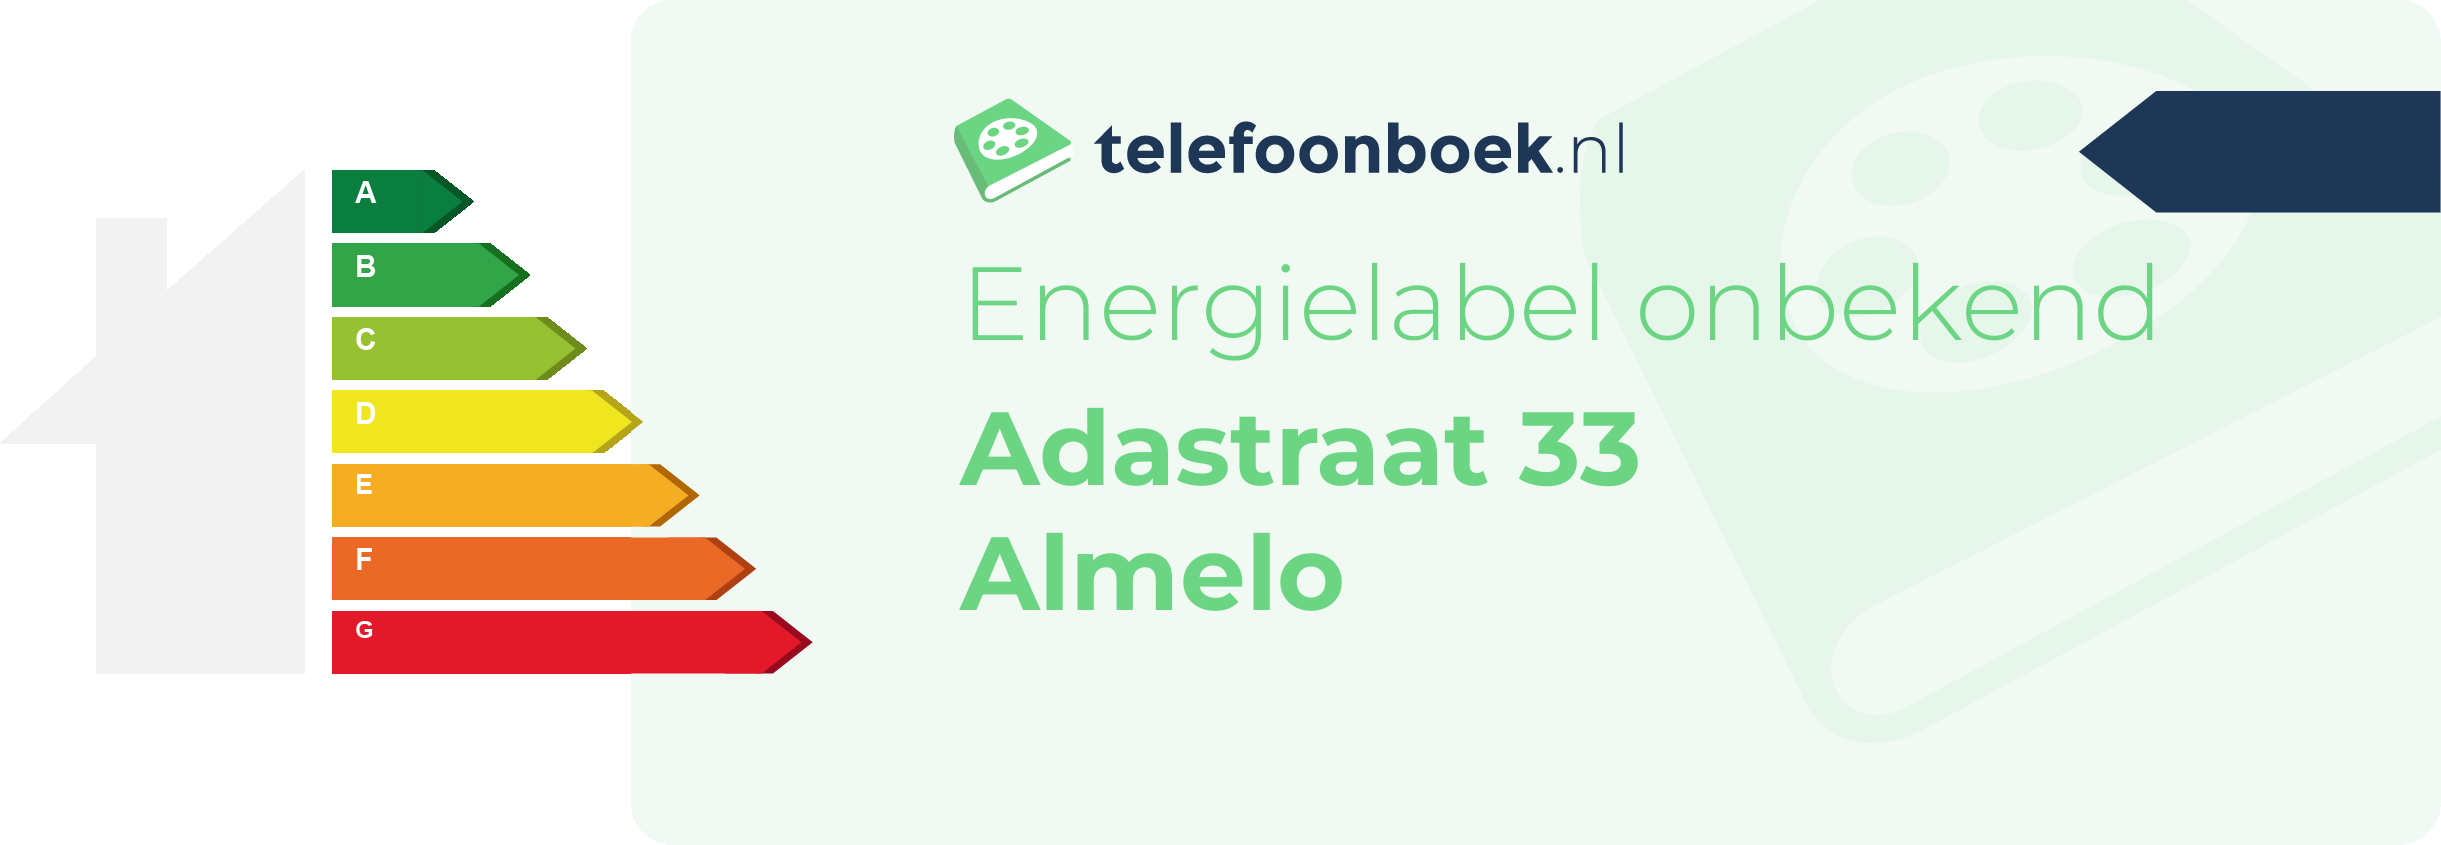 Energielabel Adastraat 33 Almelo